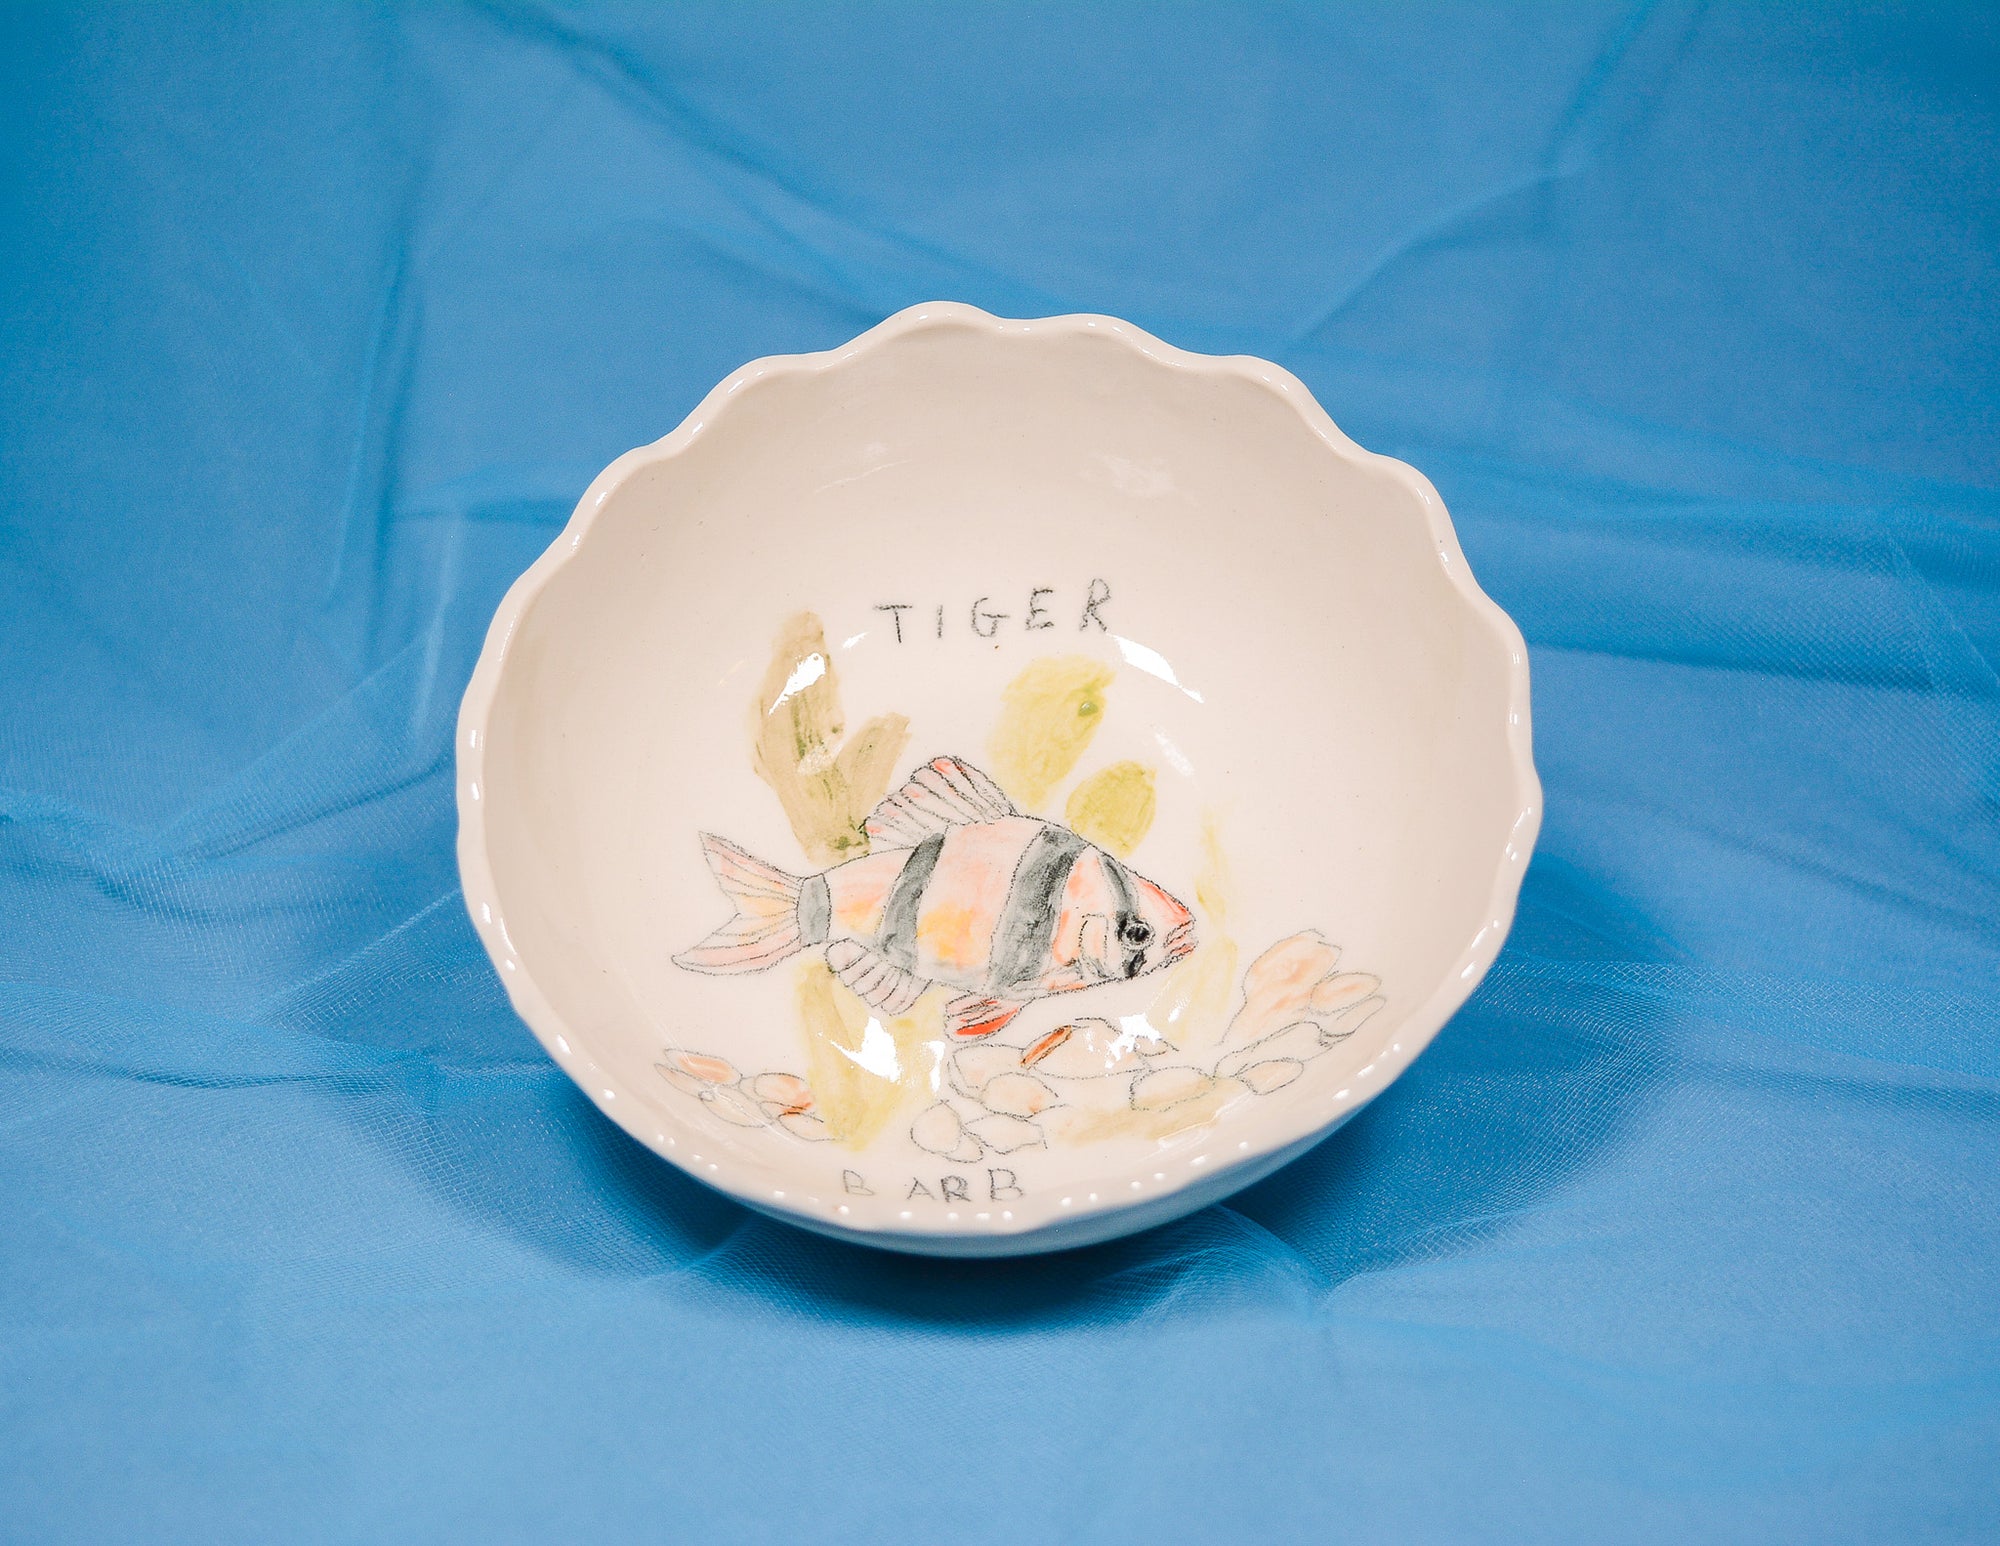 Tiger Barb Bowl